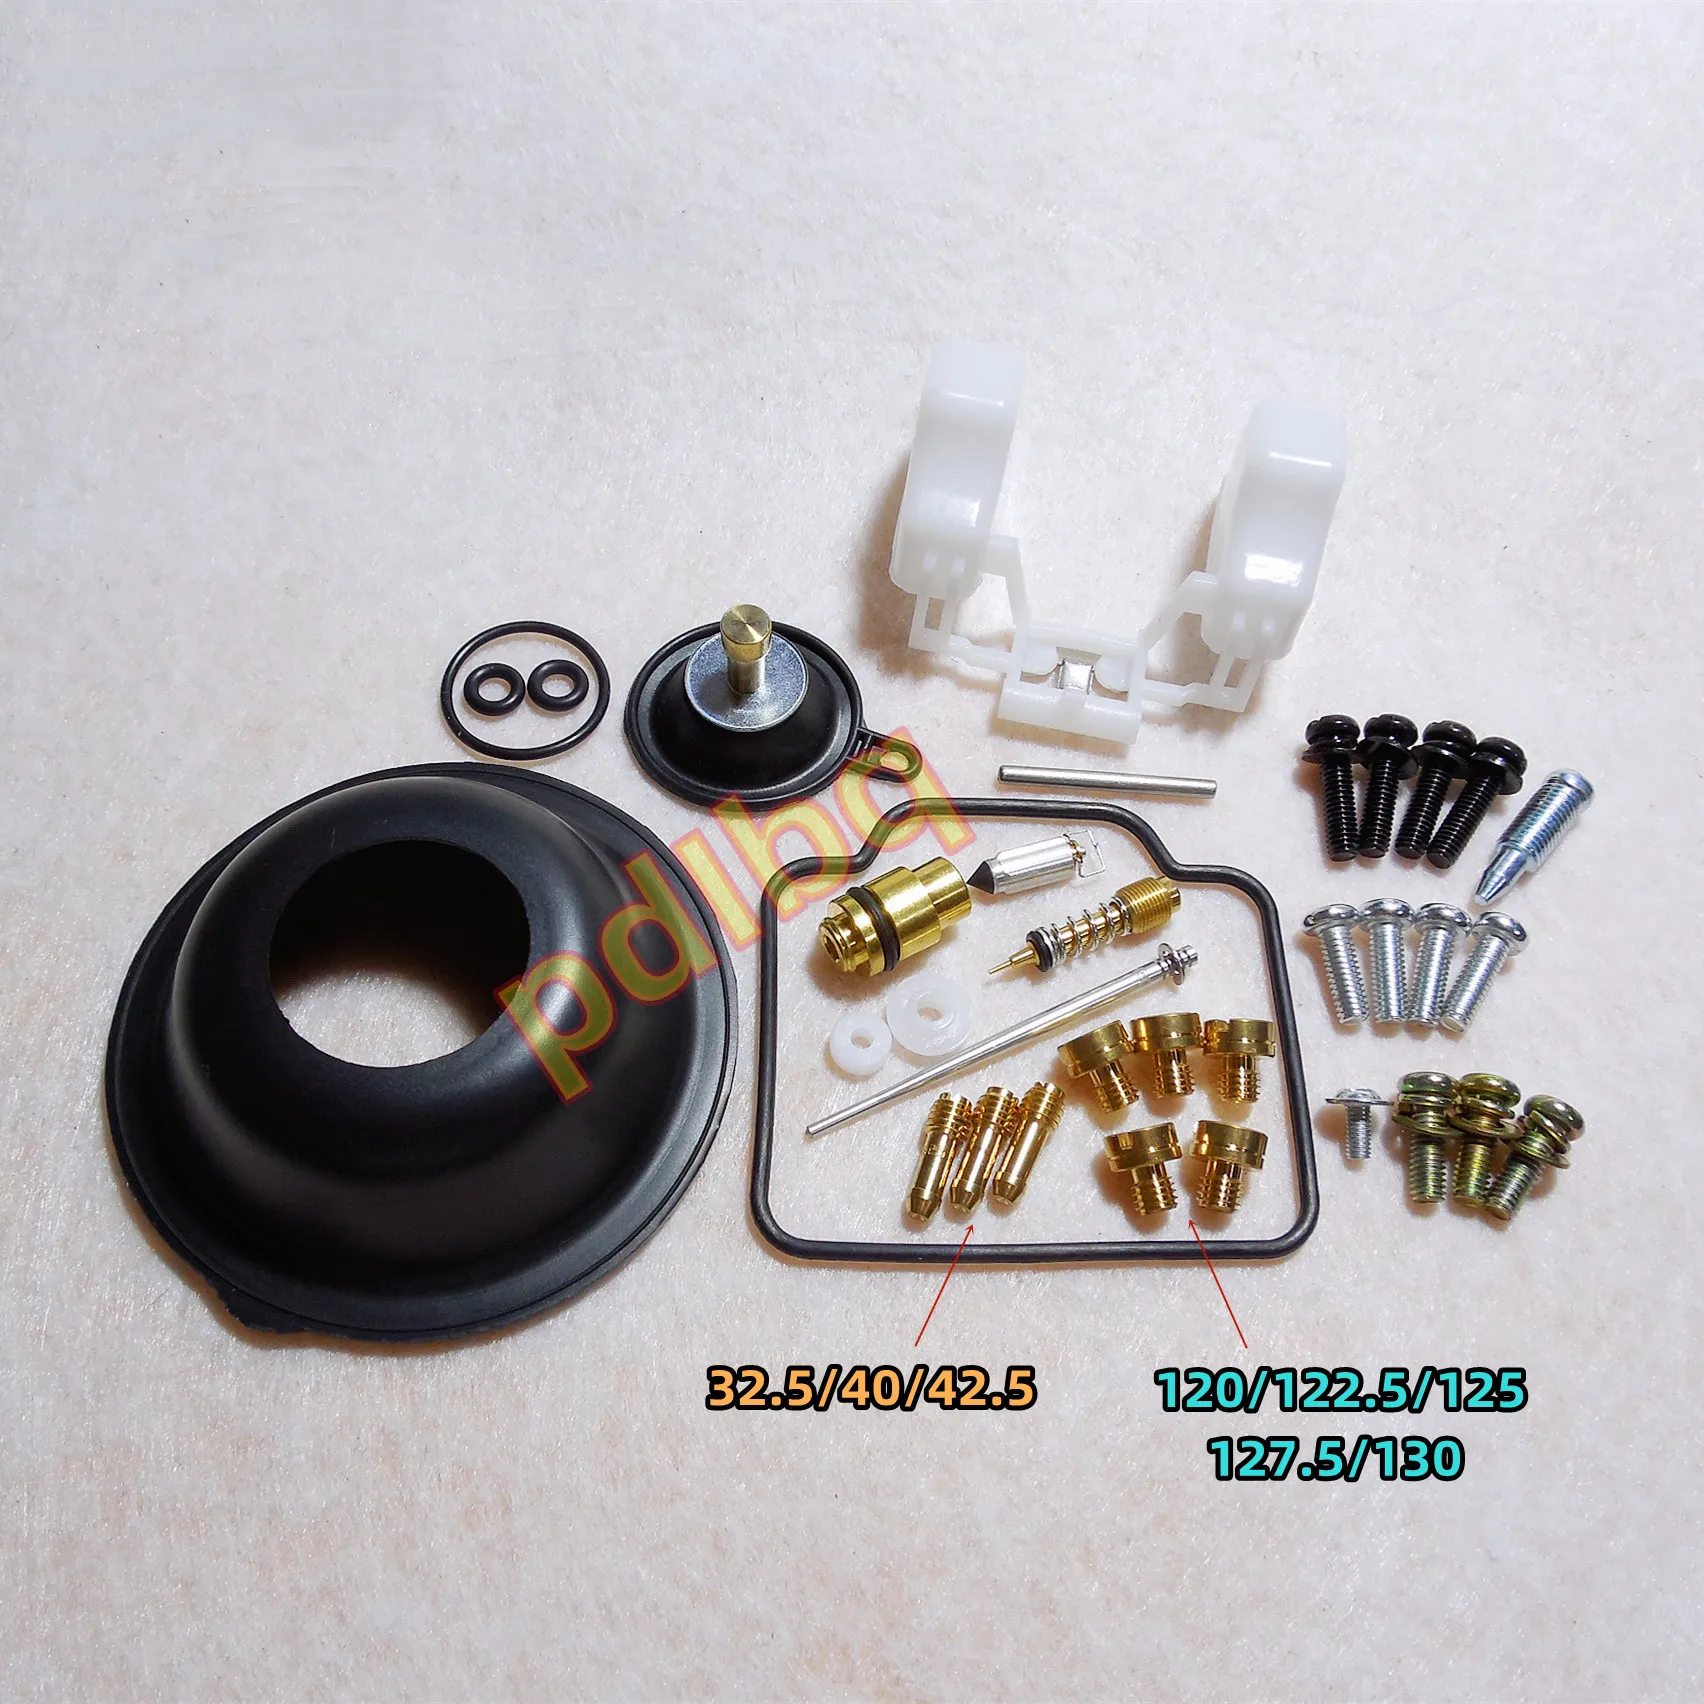 For Yamaha Serow XT225 Single Cylinder Motorcycle Carburetor Repair Kit with Vacuum Diaphragm and Float